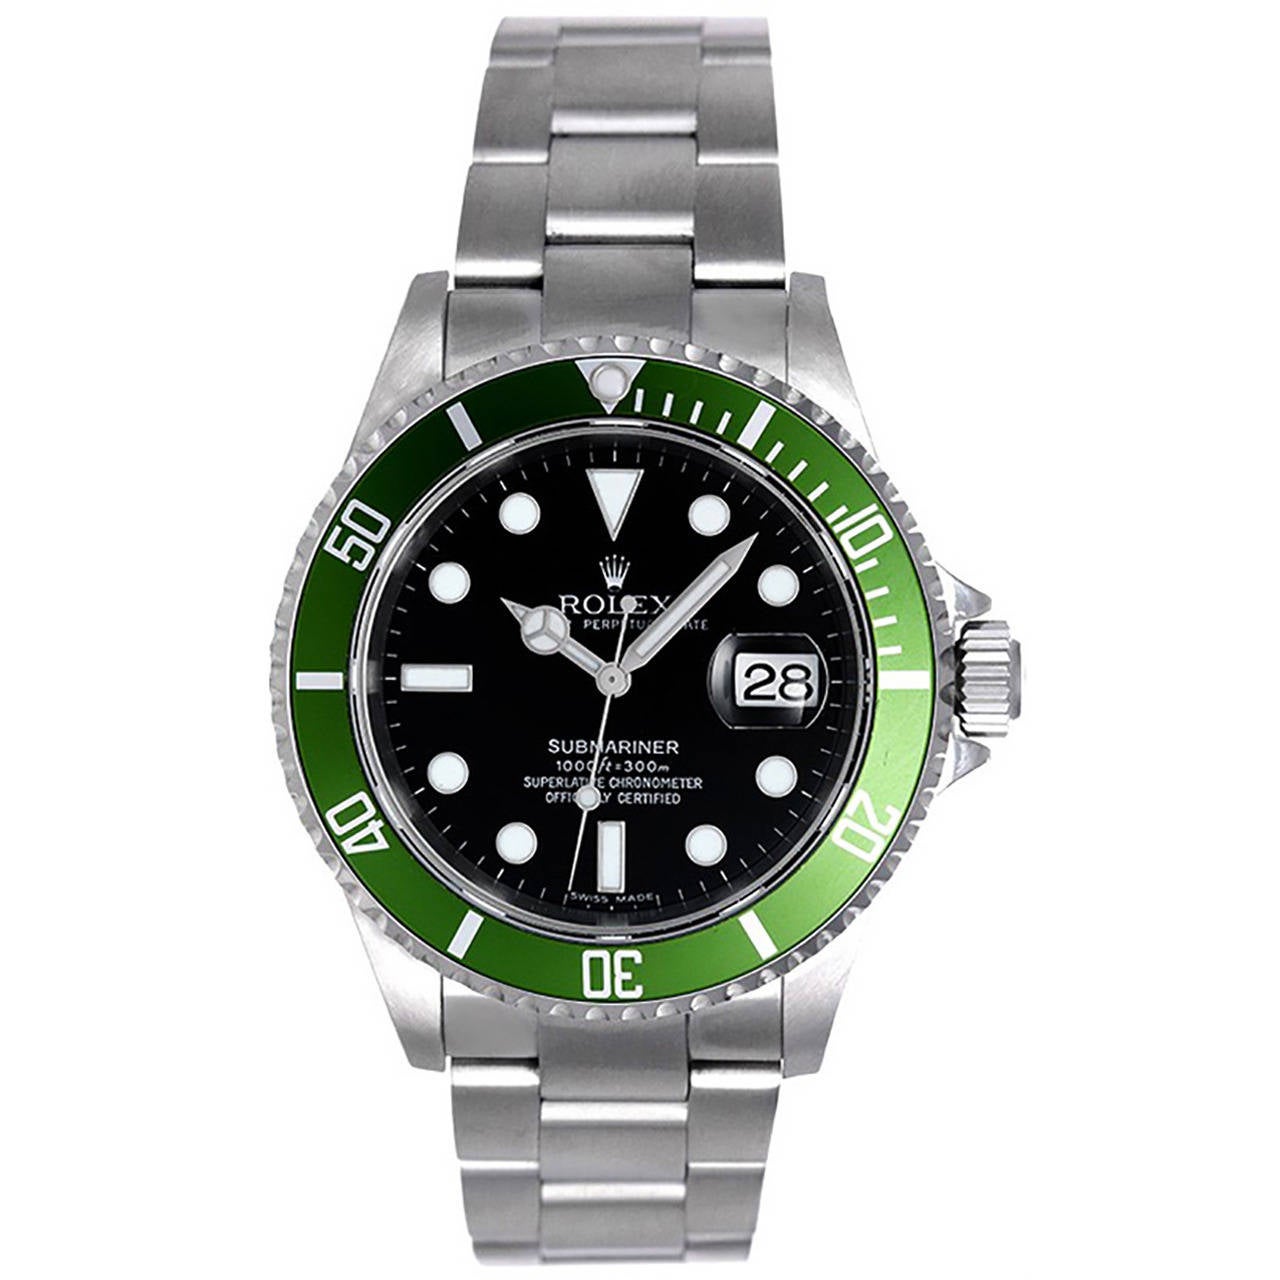 Rolex Submariner "Green" Anniversary Edition Men's Watch 16610LV (or 16610 LV)